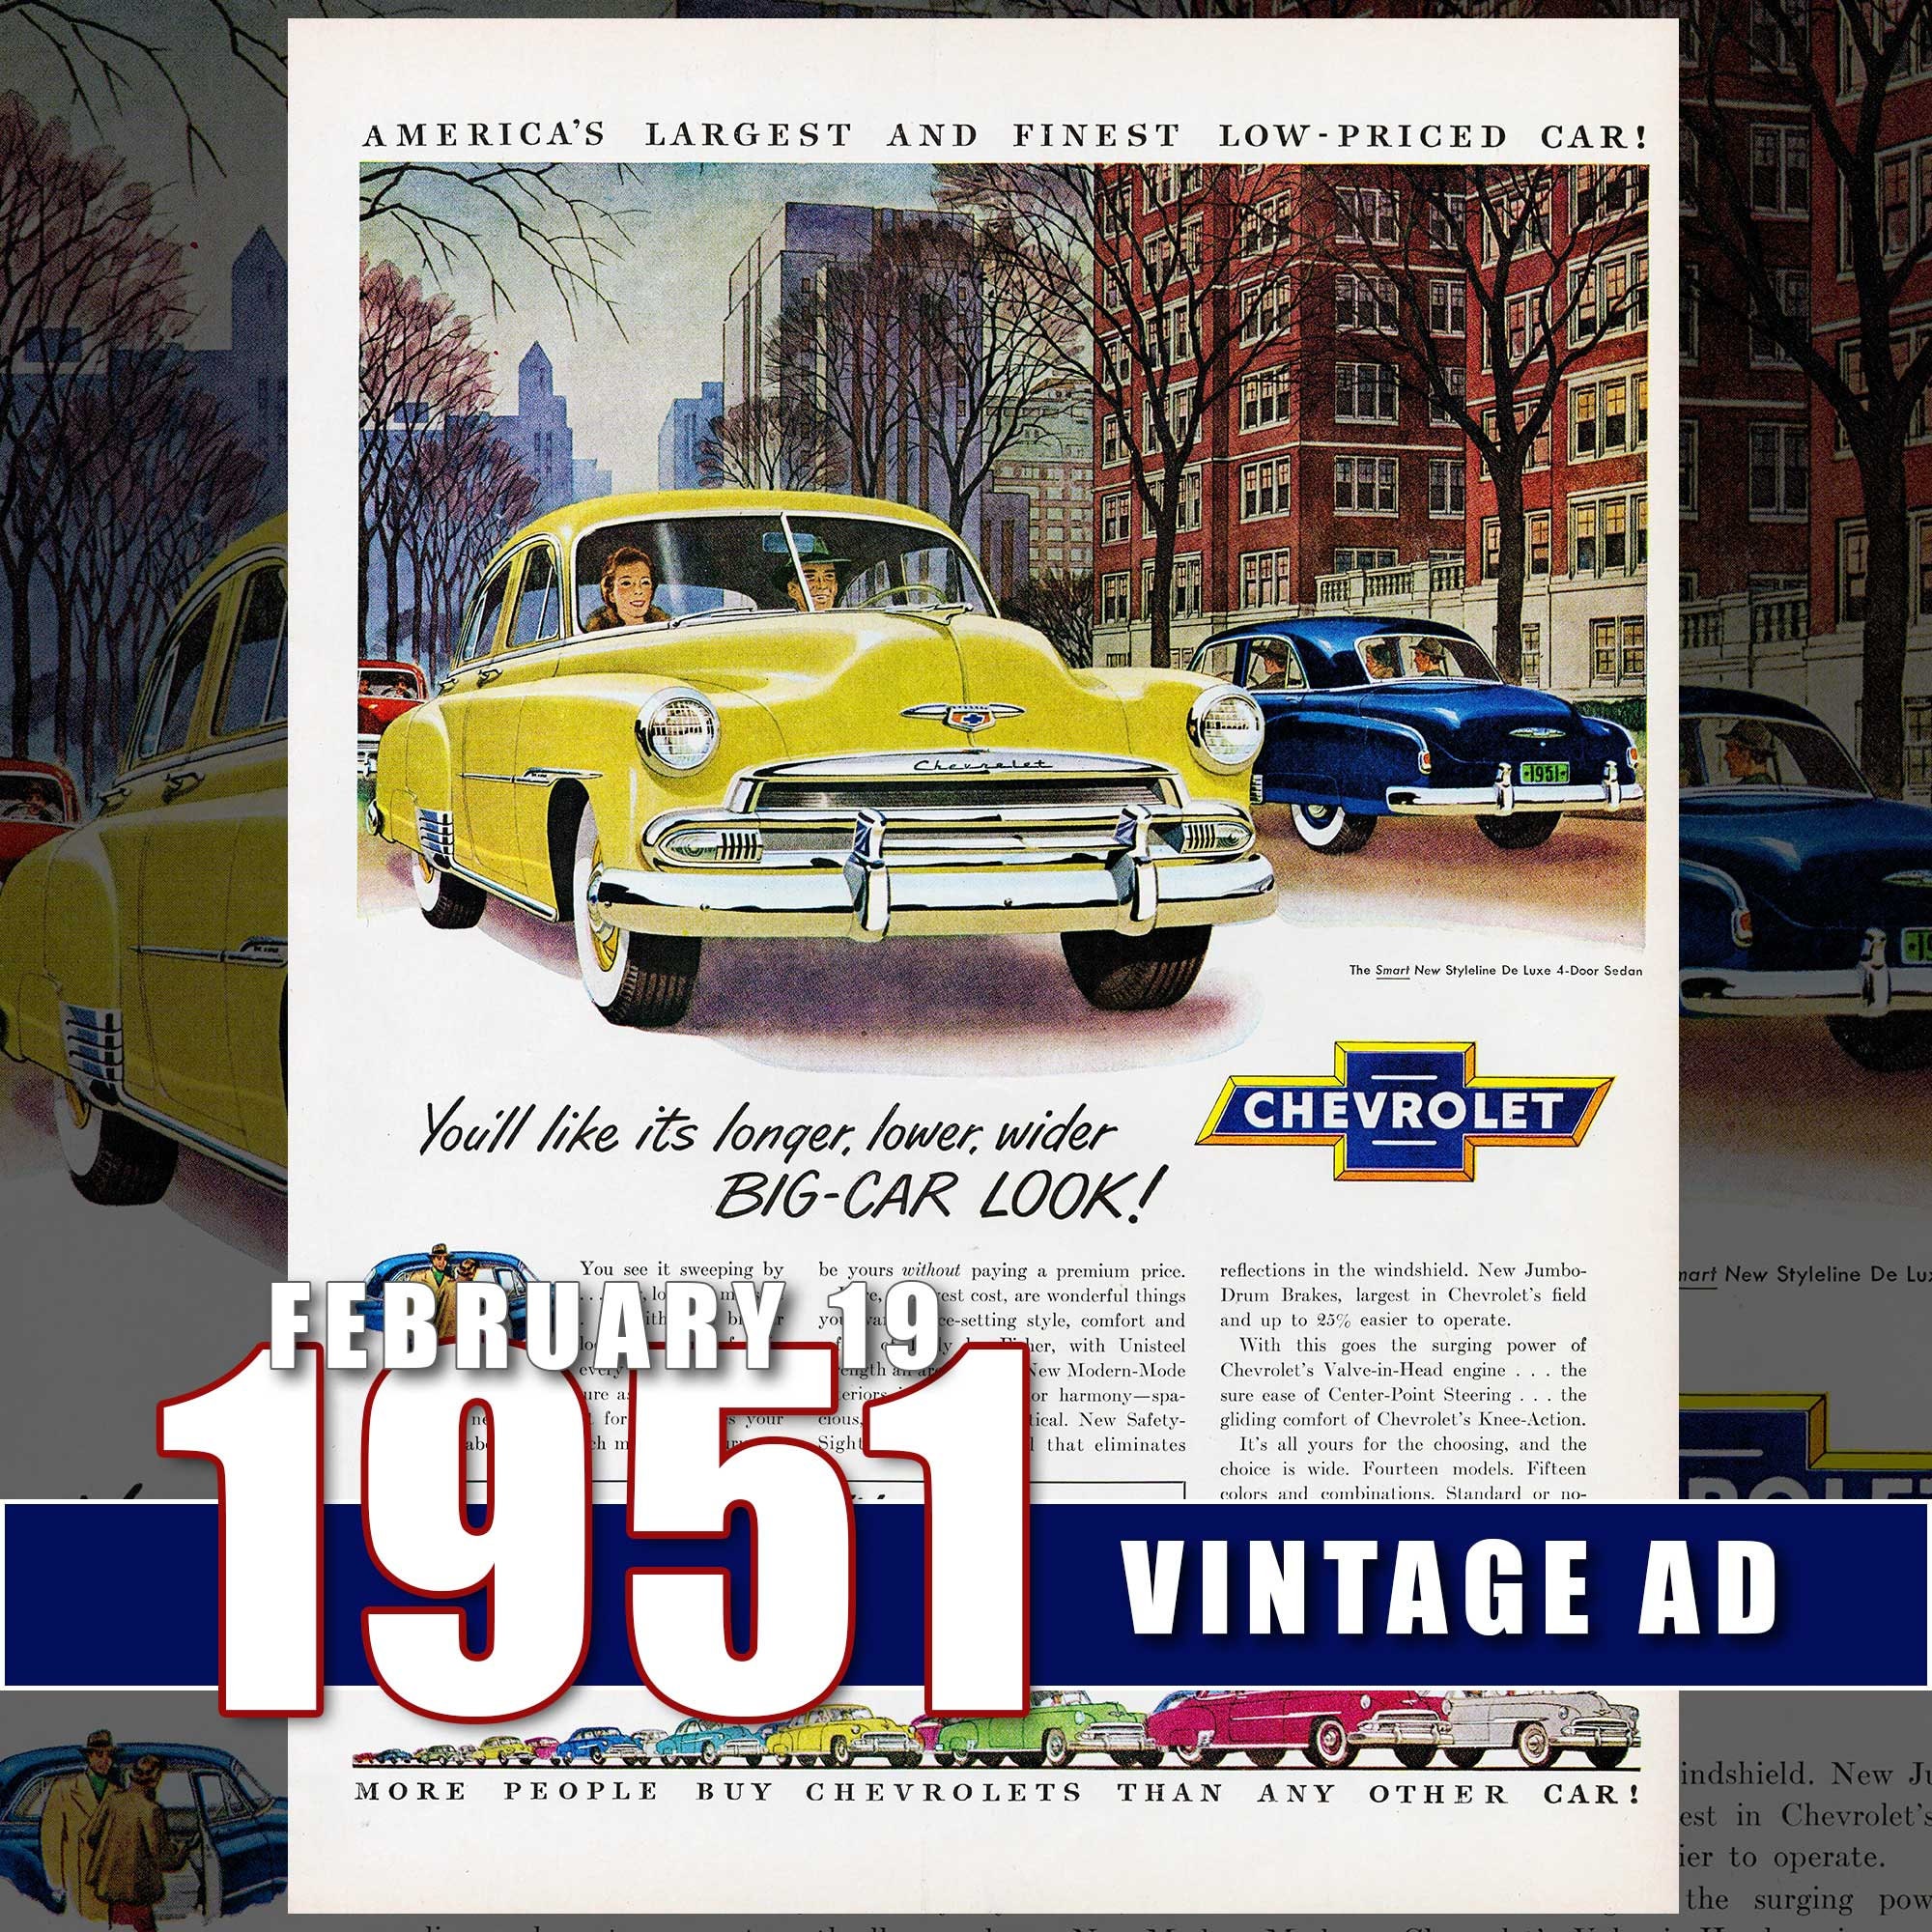 1950 Gemex Watch Bands Vintage Ad, Advertising Art, Magazine Ad